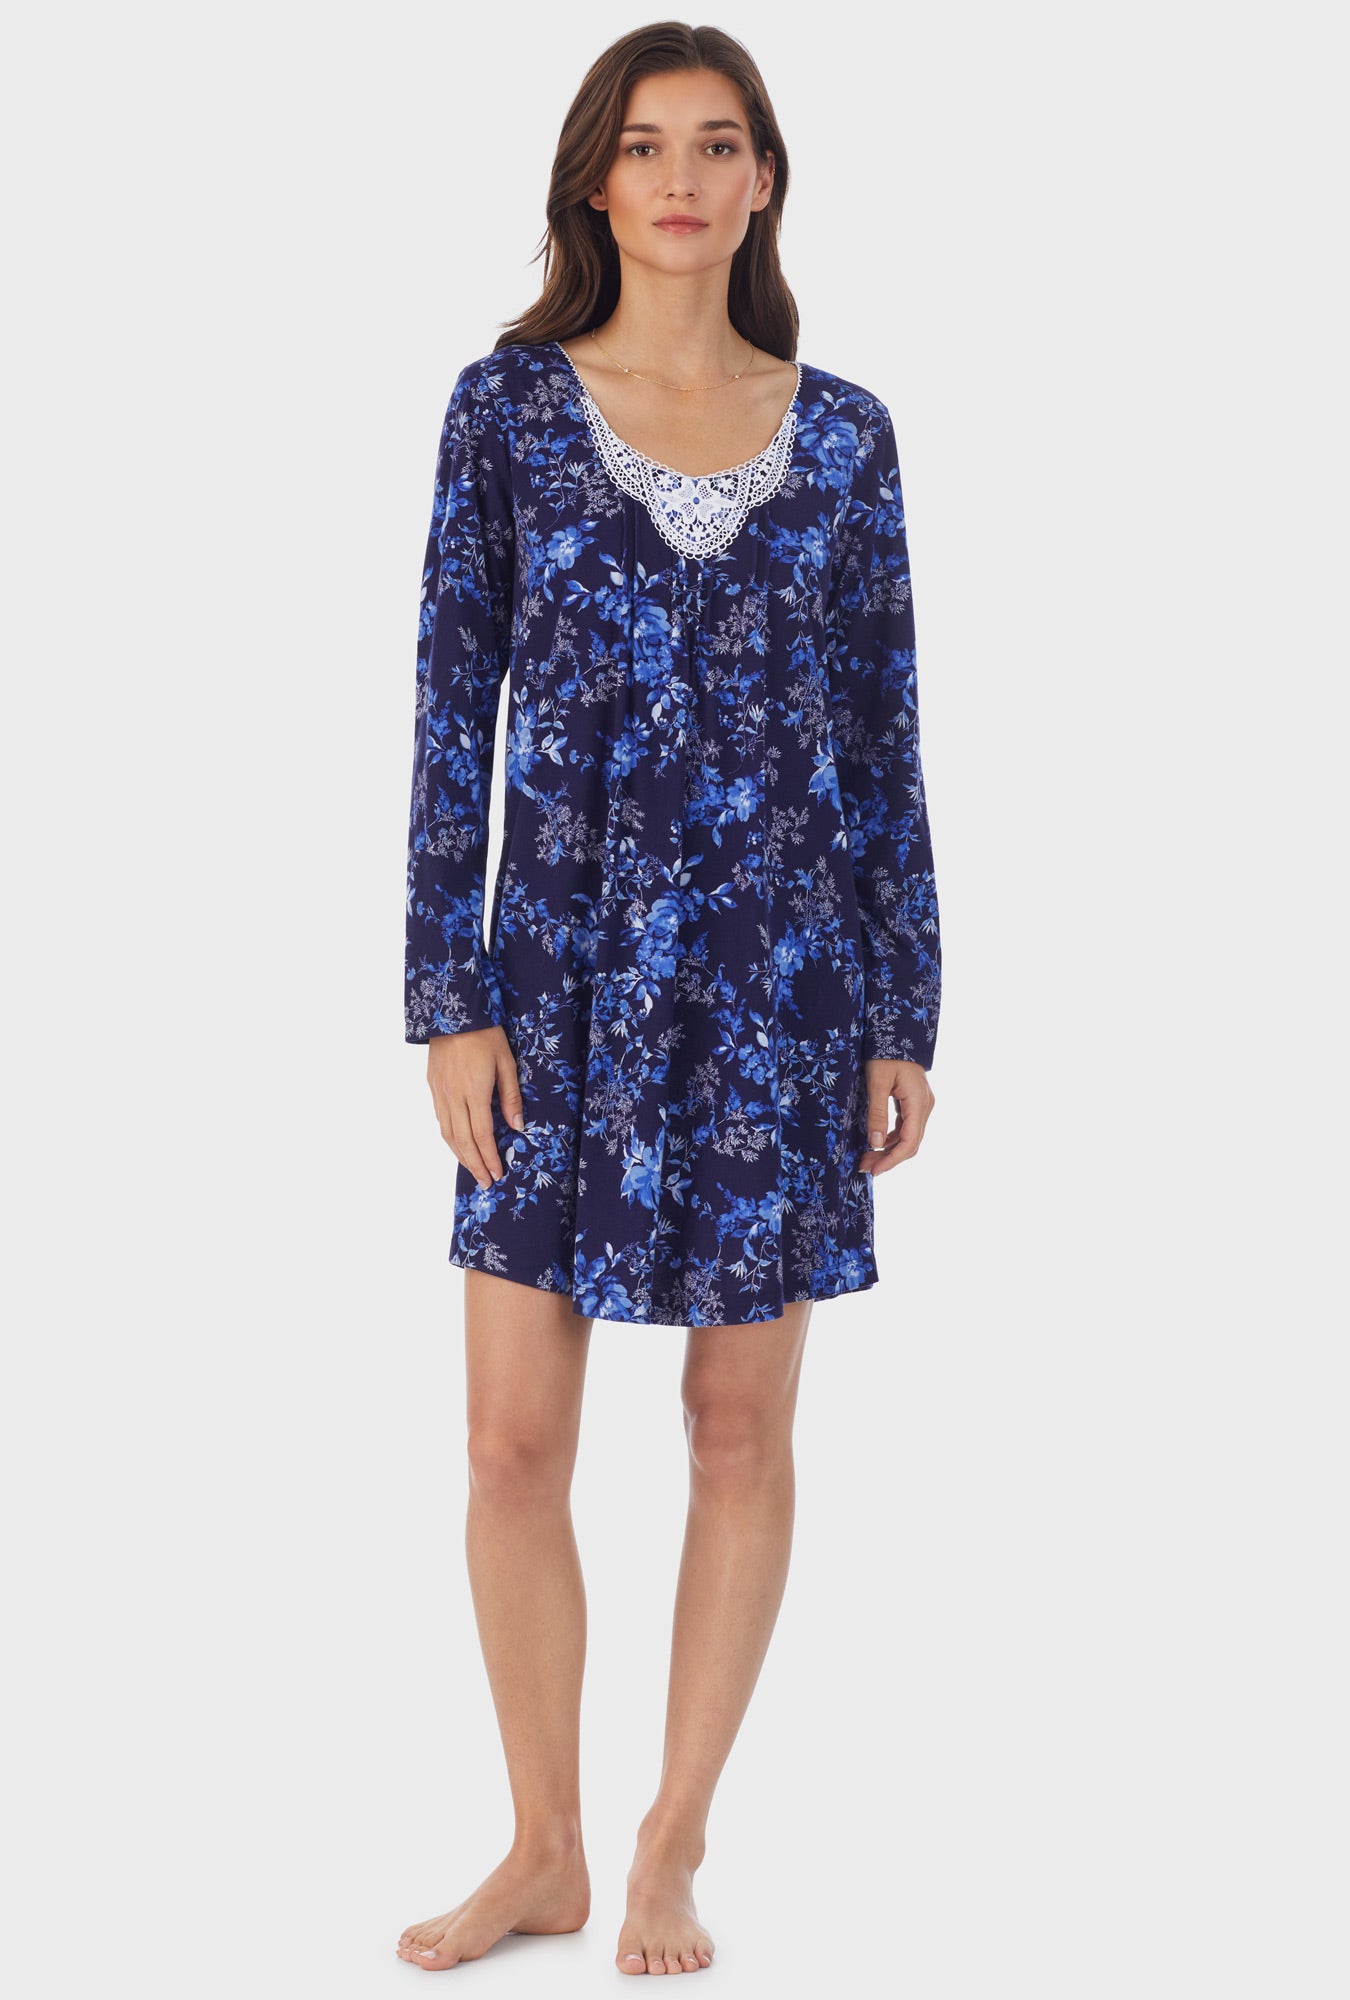 Aqua Floral Cotton Short Nightgown – Carole Hochman